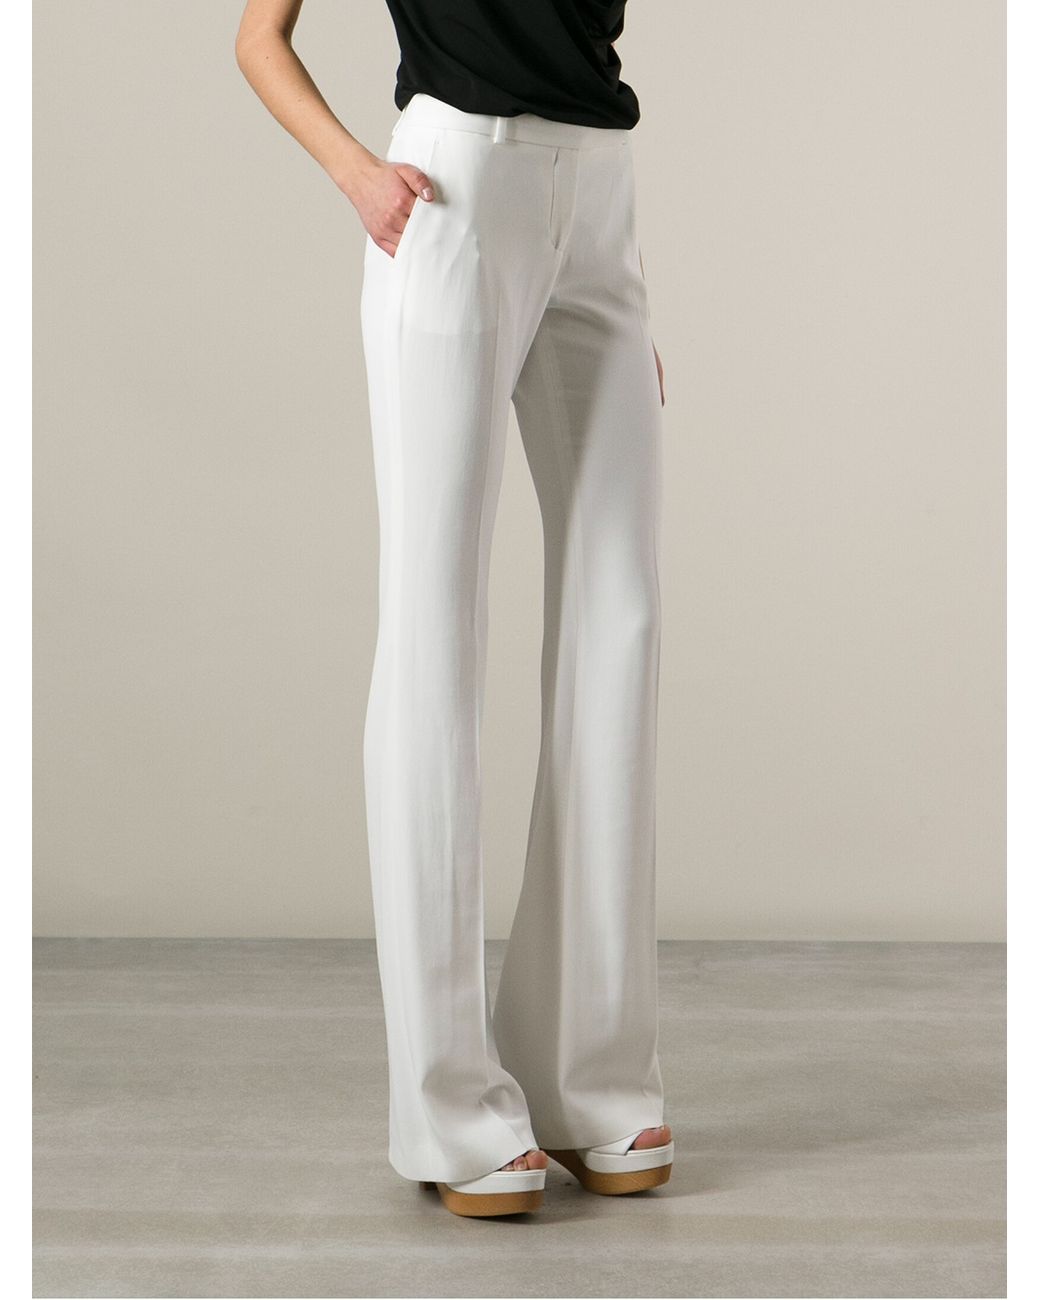 Buy White Trousers  Pants for Women by Sugathari Online  Ajiocom